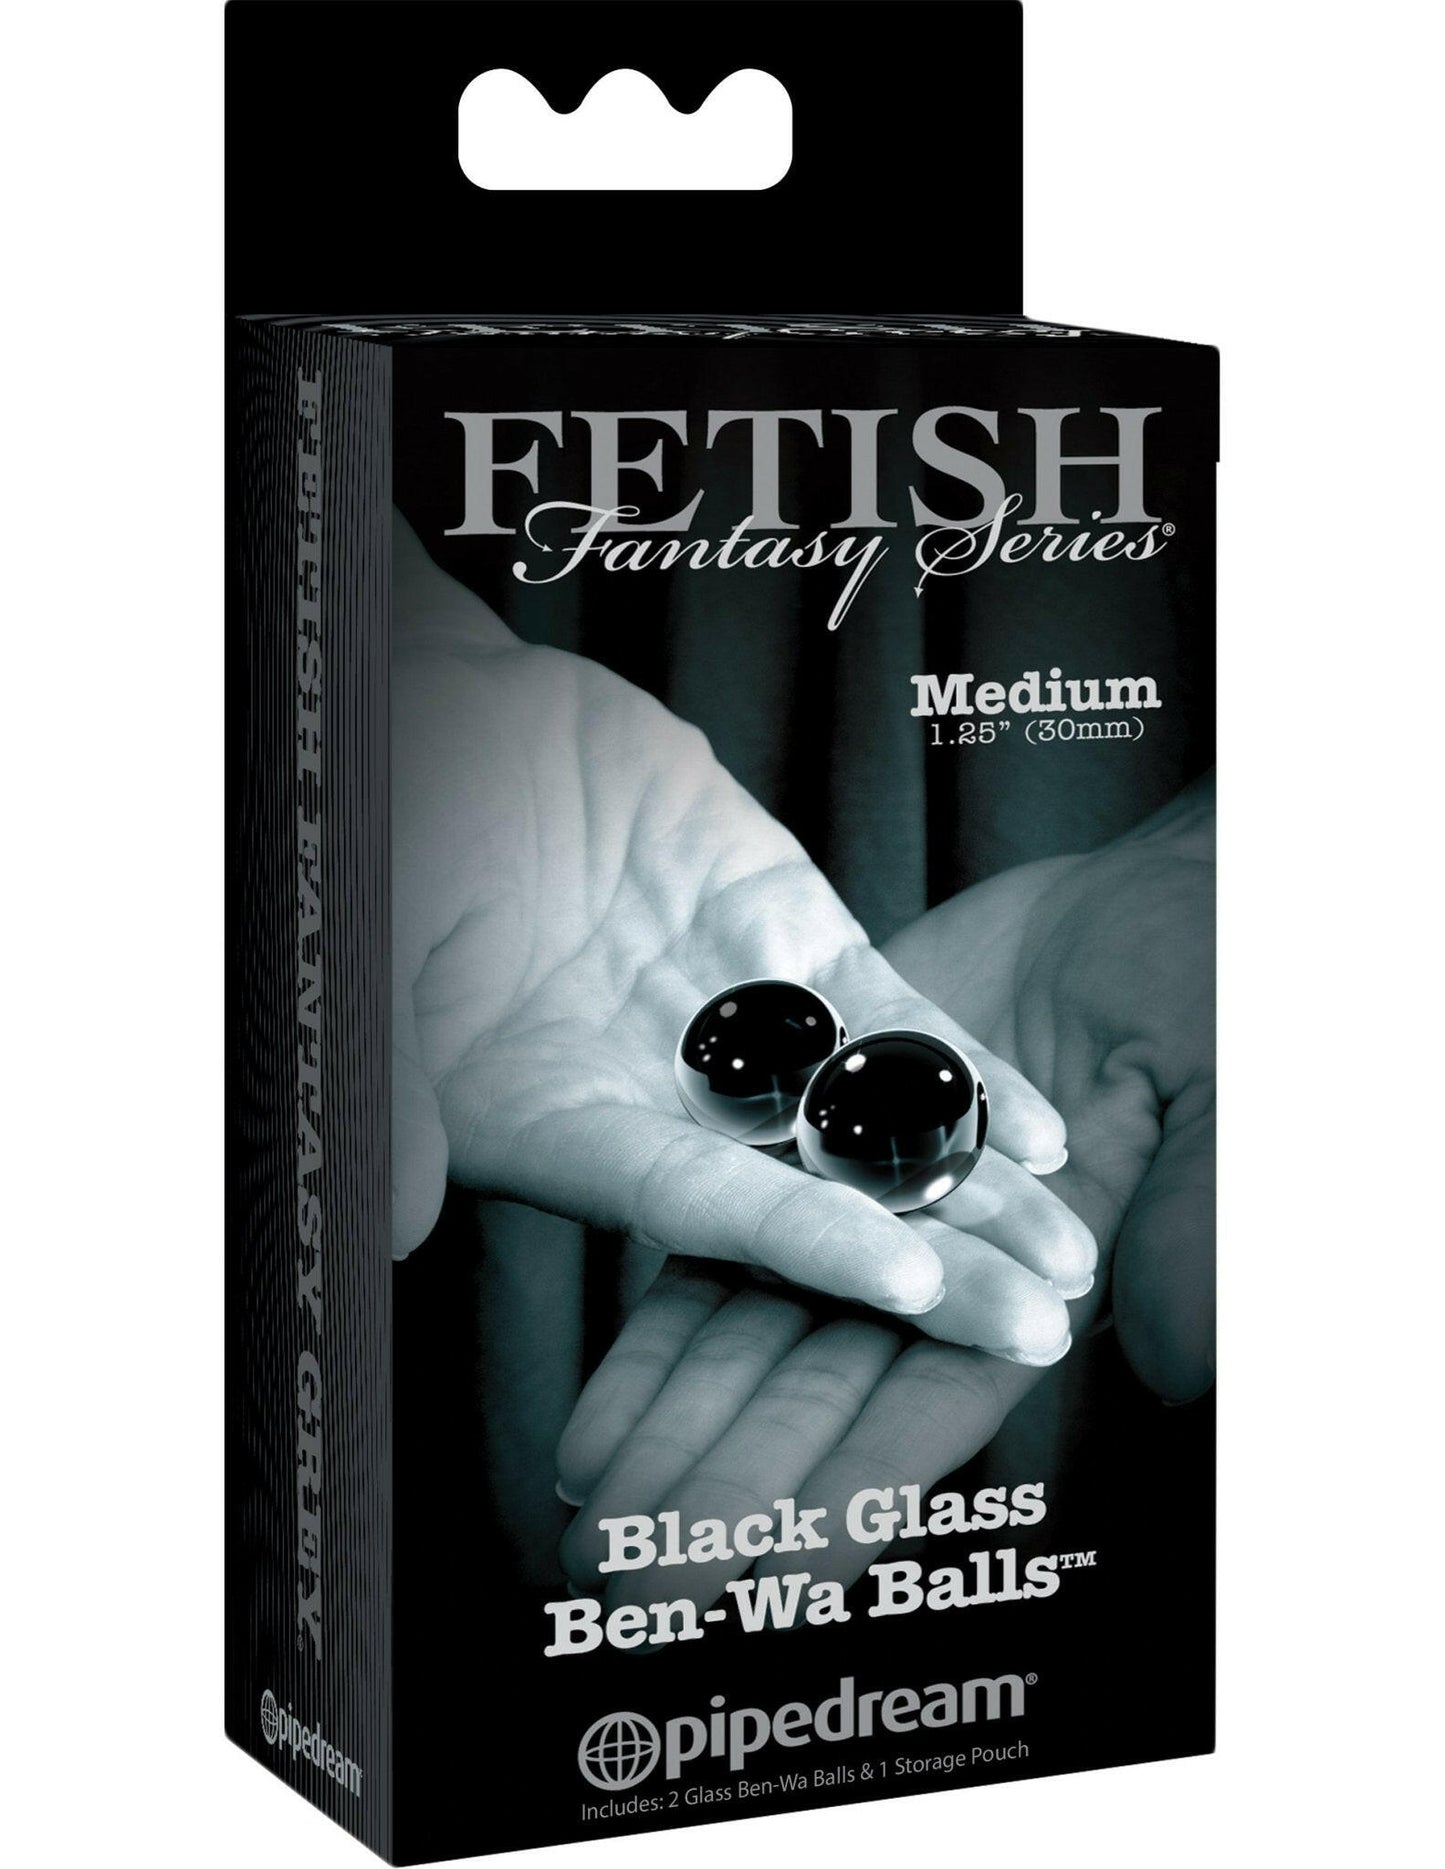 Fetish Fantasy Series Limited Edition Glass Ben-Wa Balls - Medium - Black - TemptationsHoliday Blowout SaleTemptationsPD4434-23